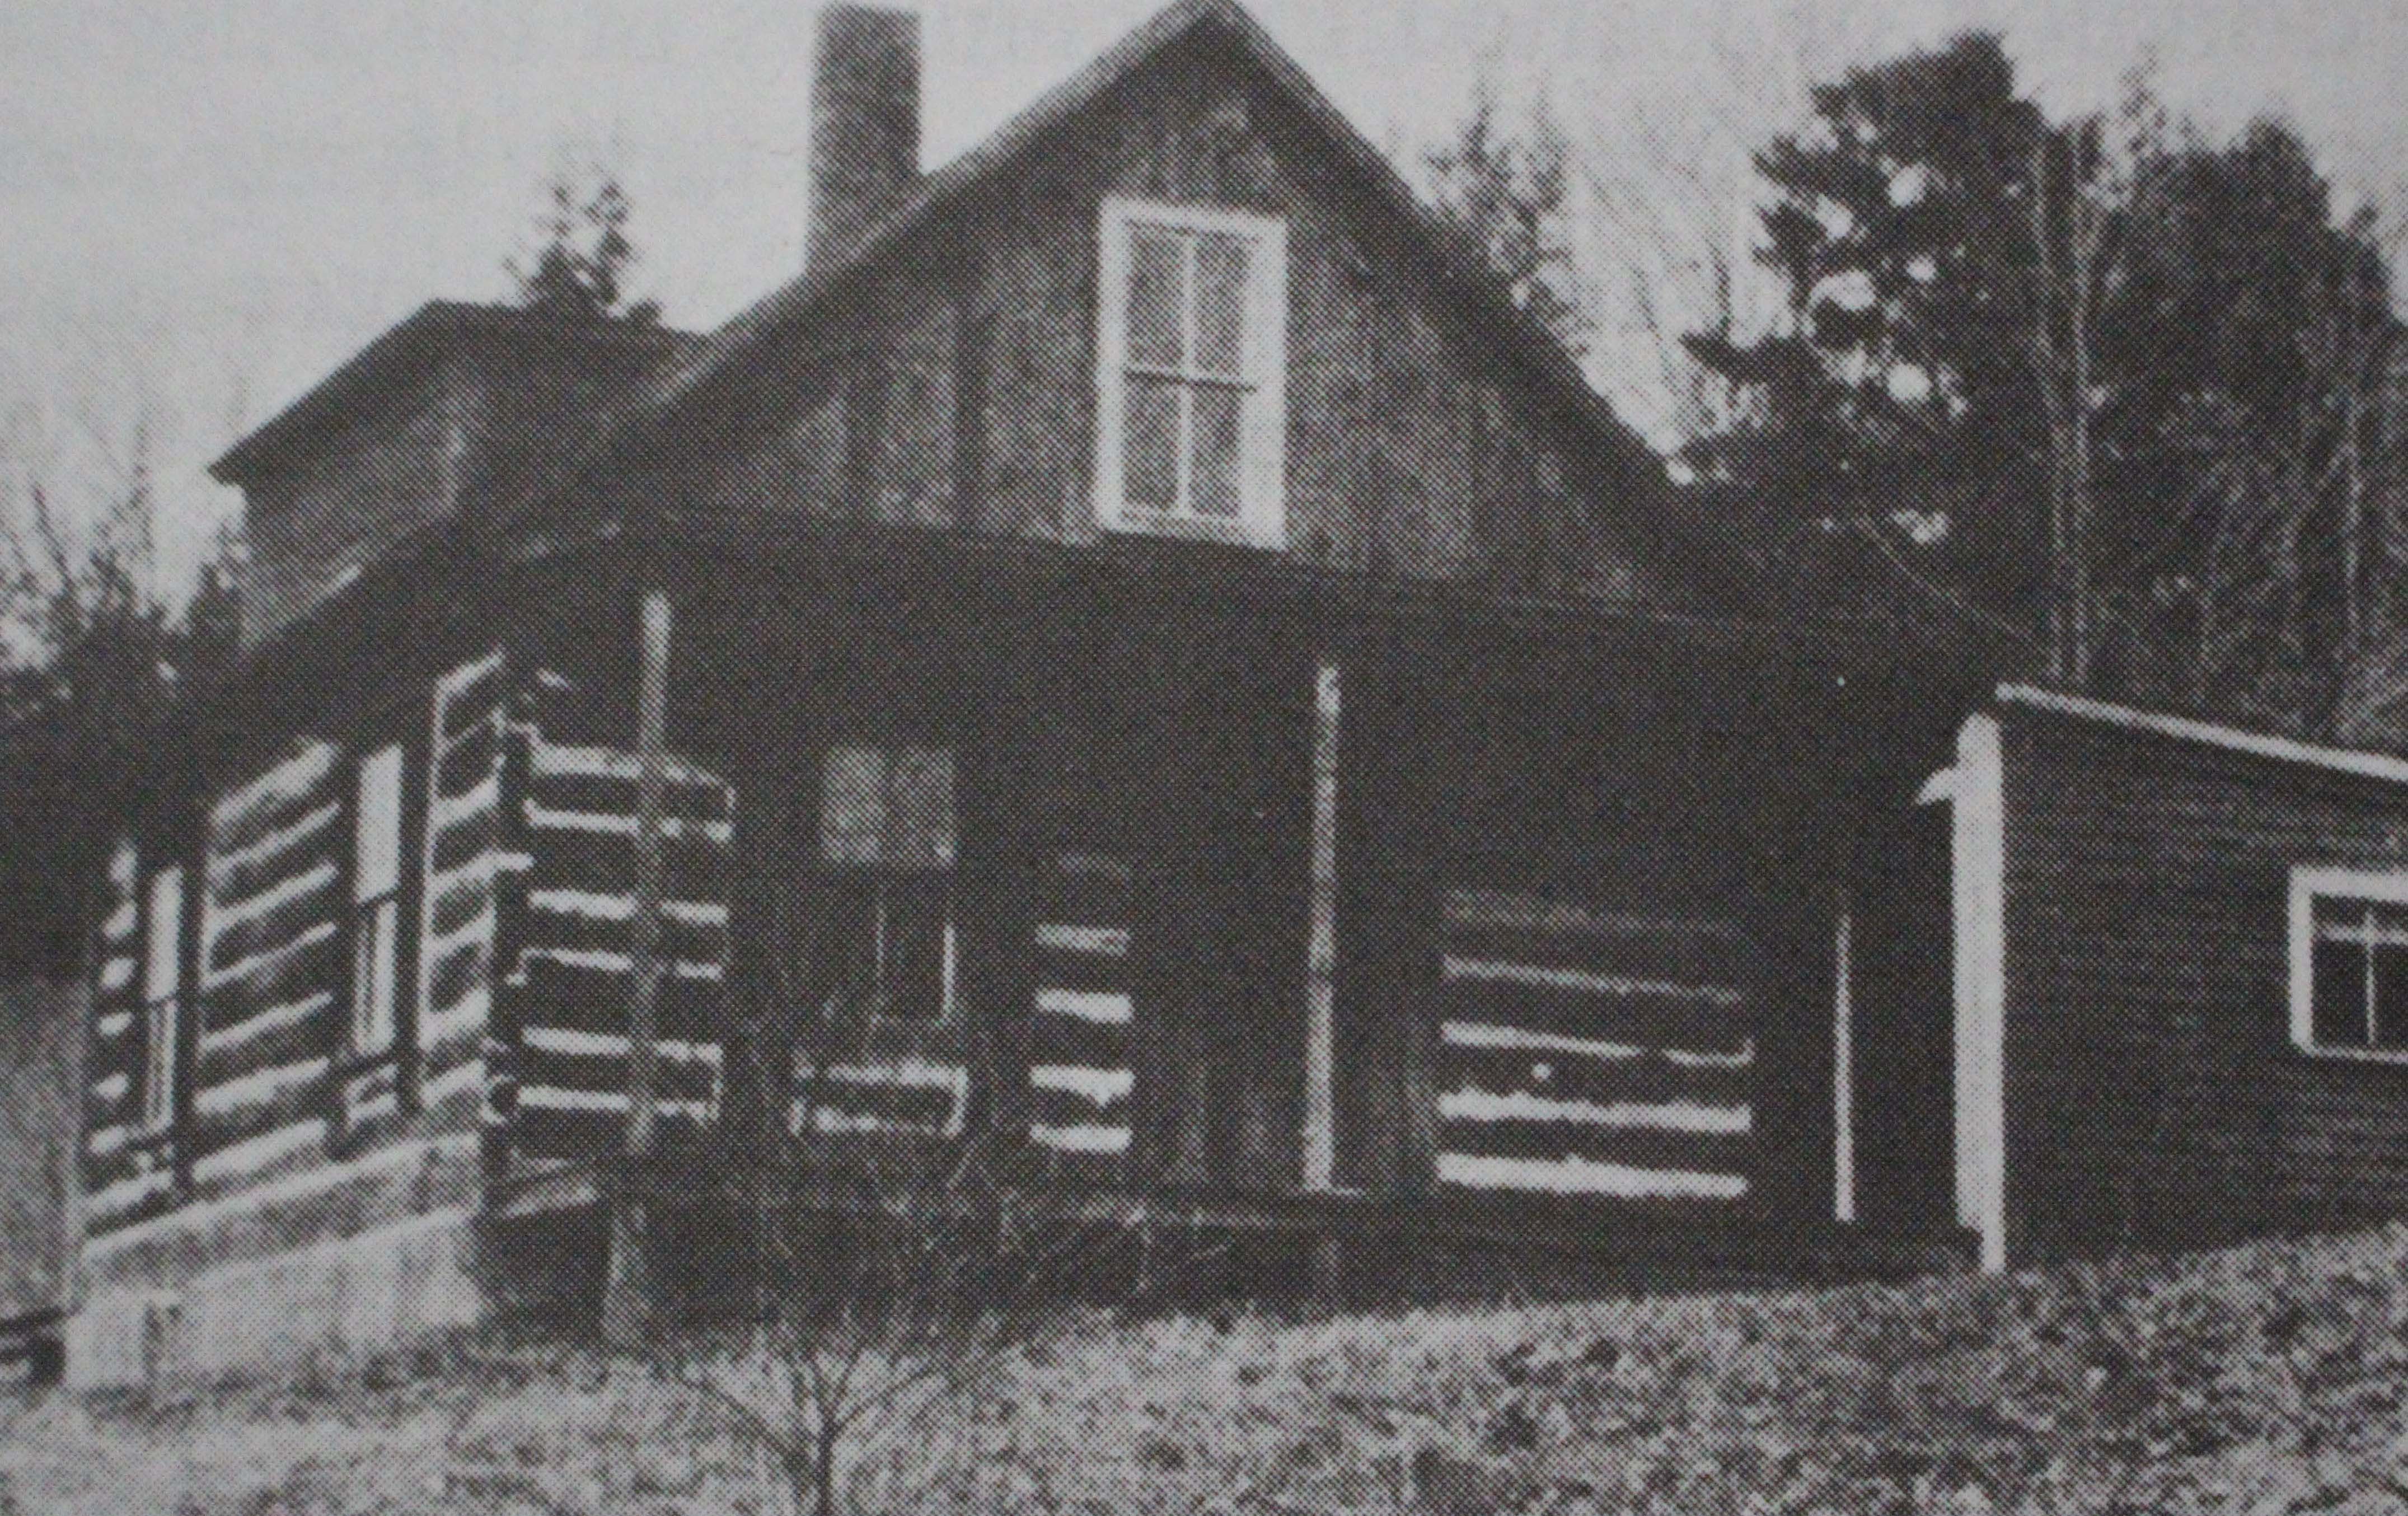 Cabin in original location